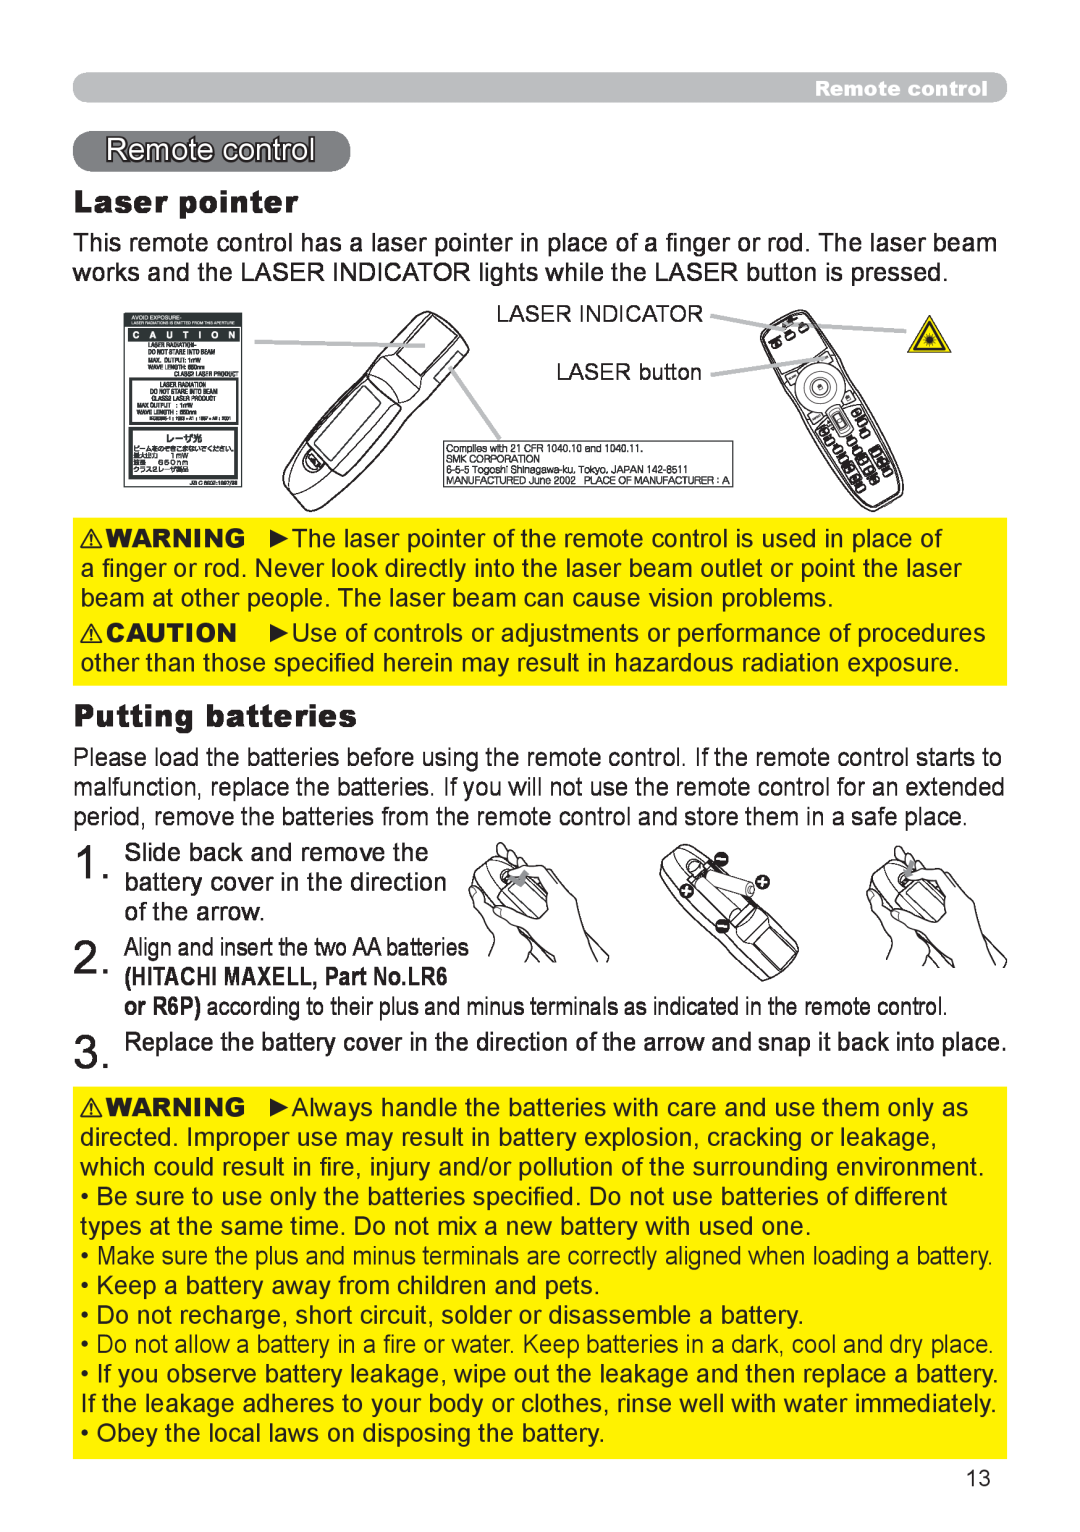 Planar PR9020 user manual Remote control, Laser pointer, Putting batteries, HITACHI MAXELL, Part No.LR6 